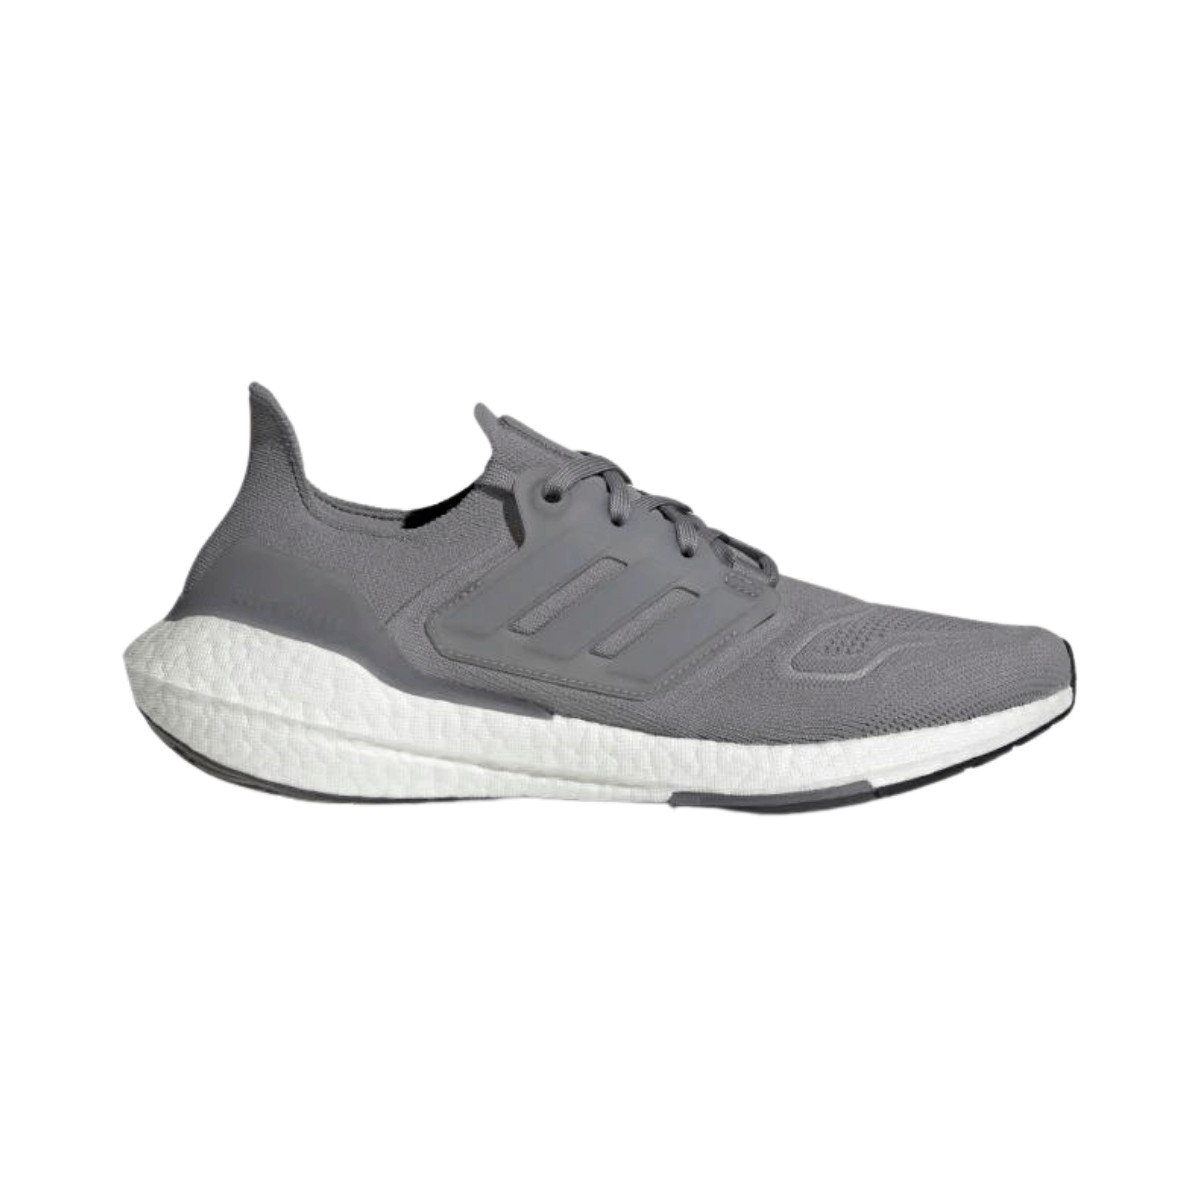 Adidas Ultraboost 22 Shoes Gray, Size UK 7.5